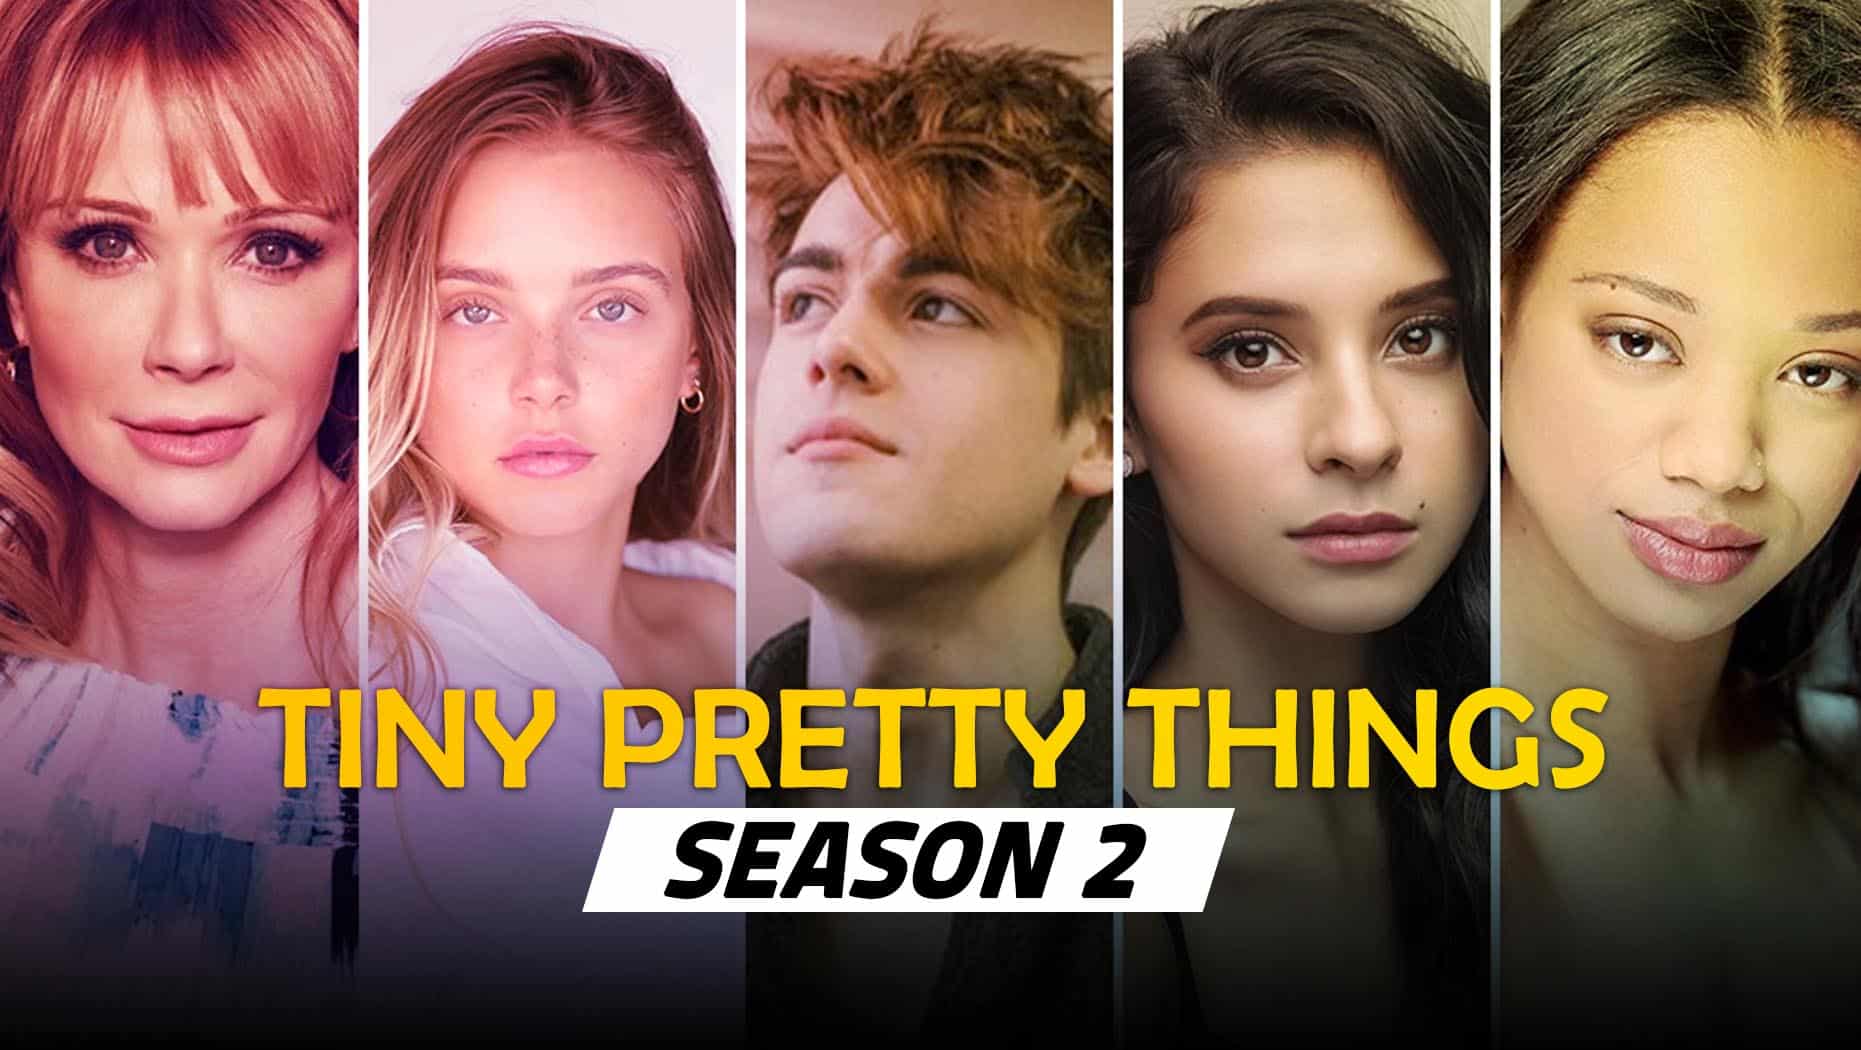 Has Netflix renewed the ‘Tiny Pretty Things’ for Season 2?